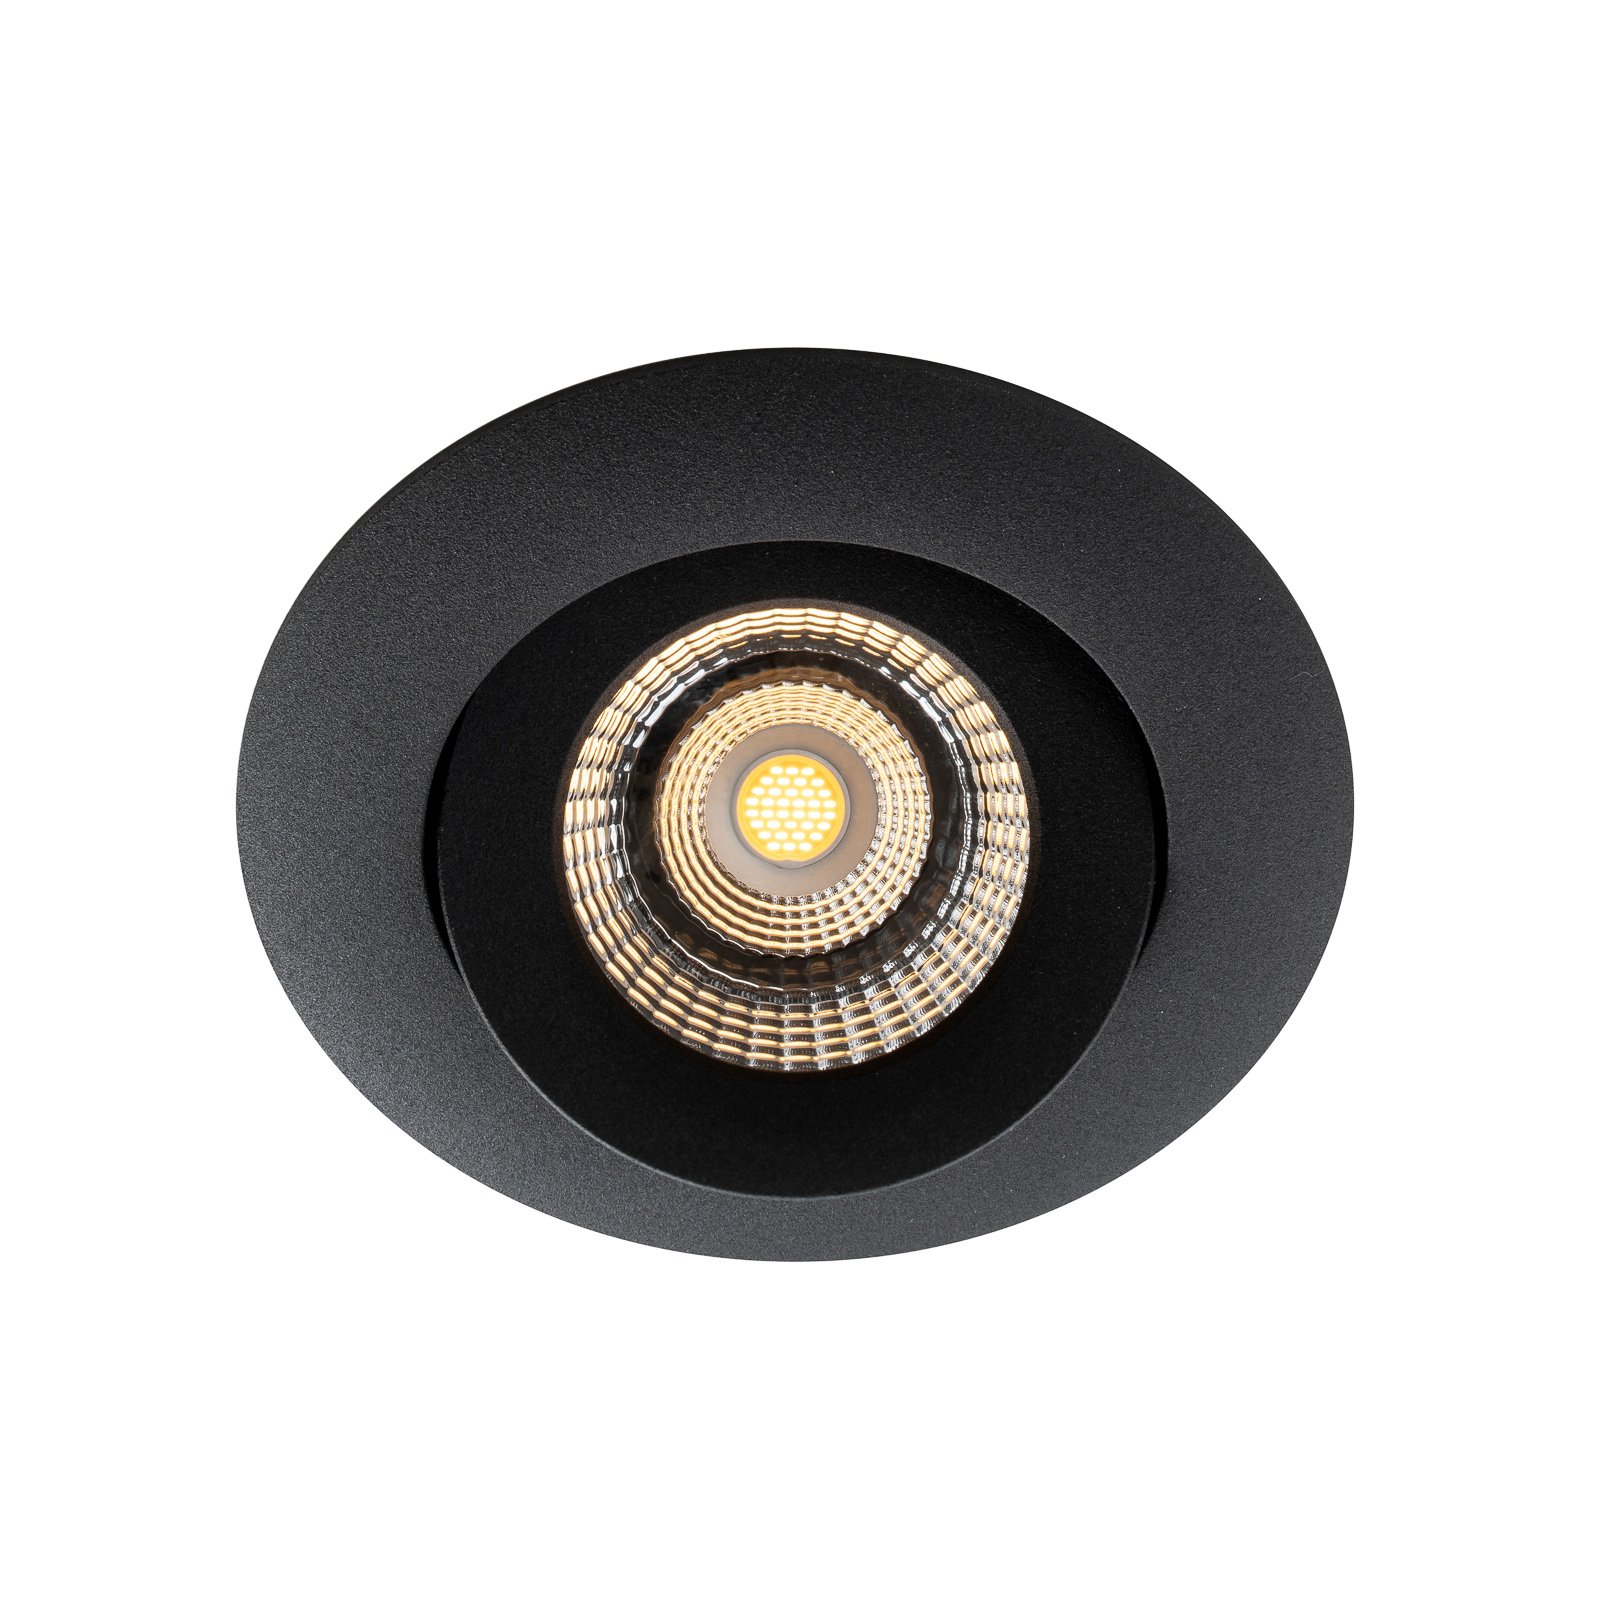 SLC One luci da incasso a 360° Dime LED nero dim-to-warm